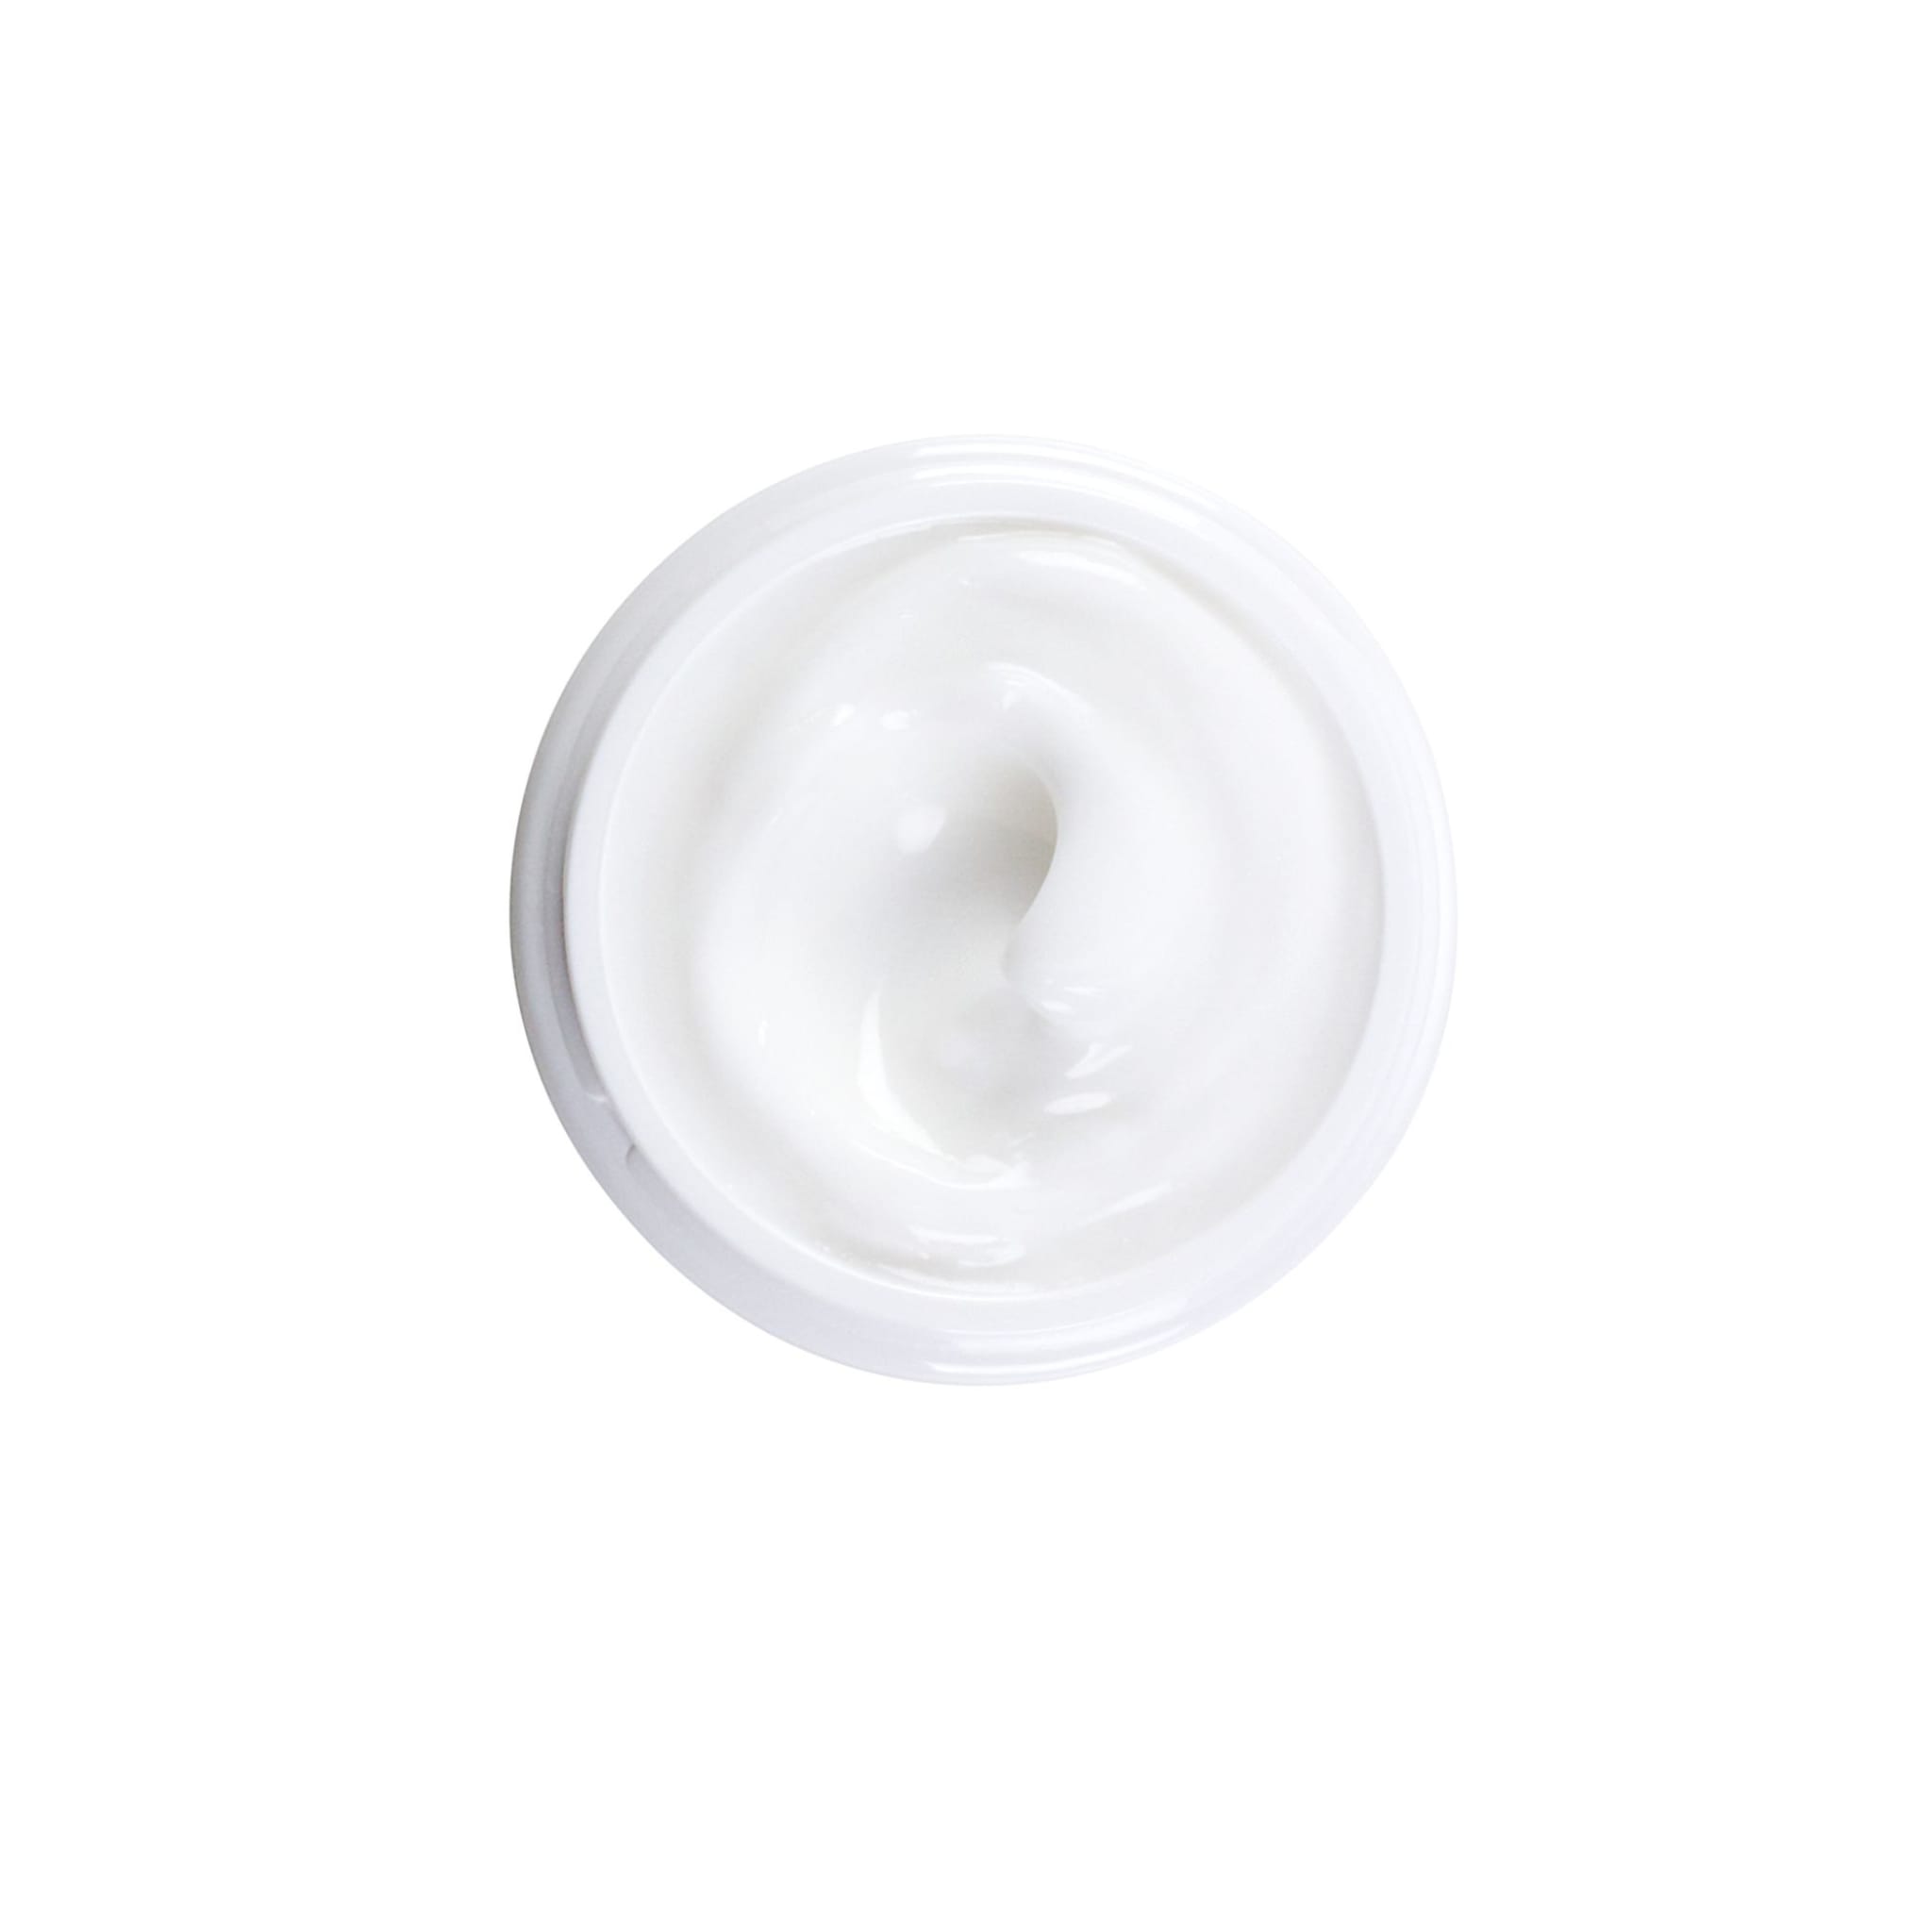 Ultra Facial Cream - Dry Skin, 125 ML